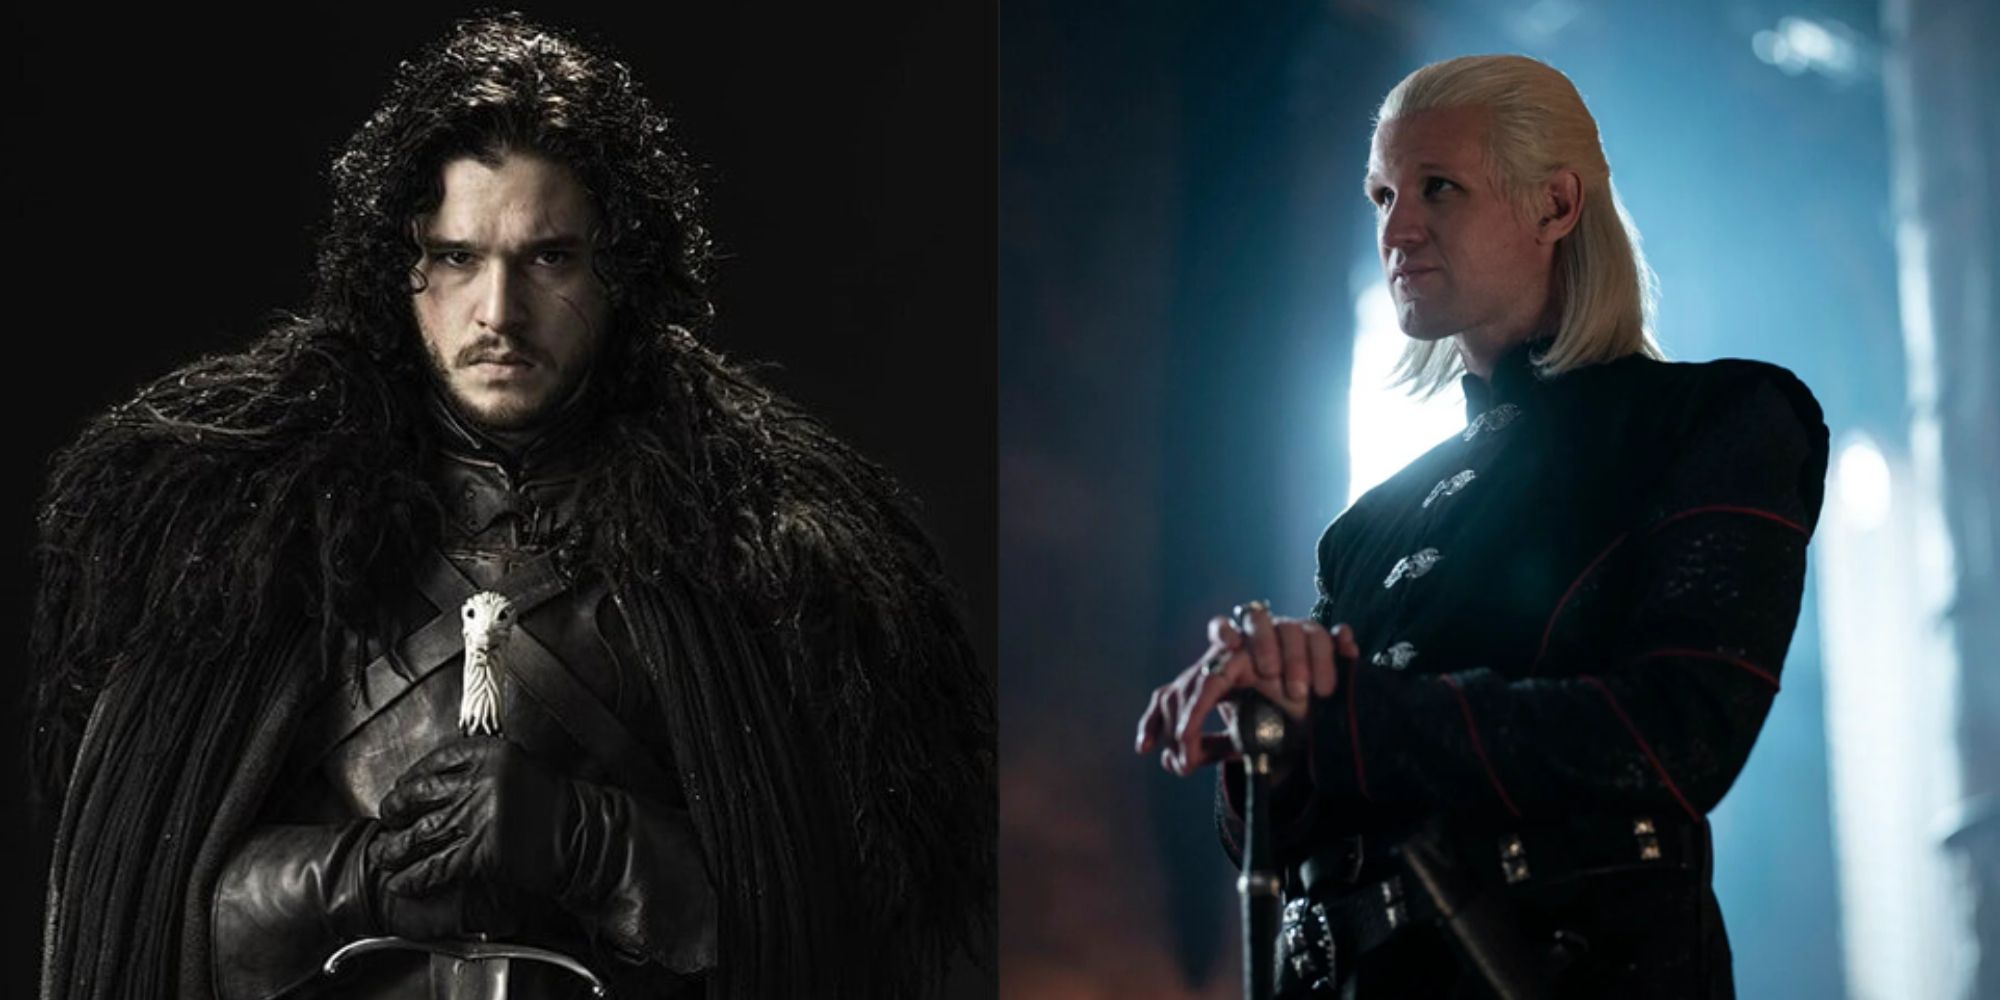 Split image showing Jon Snow in Game of Thrones and Daemon Targaryen in House of the Dragon